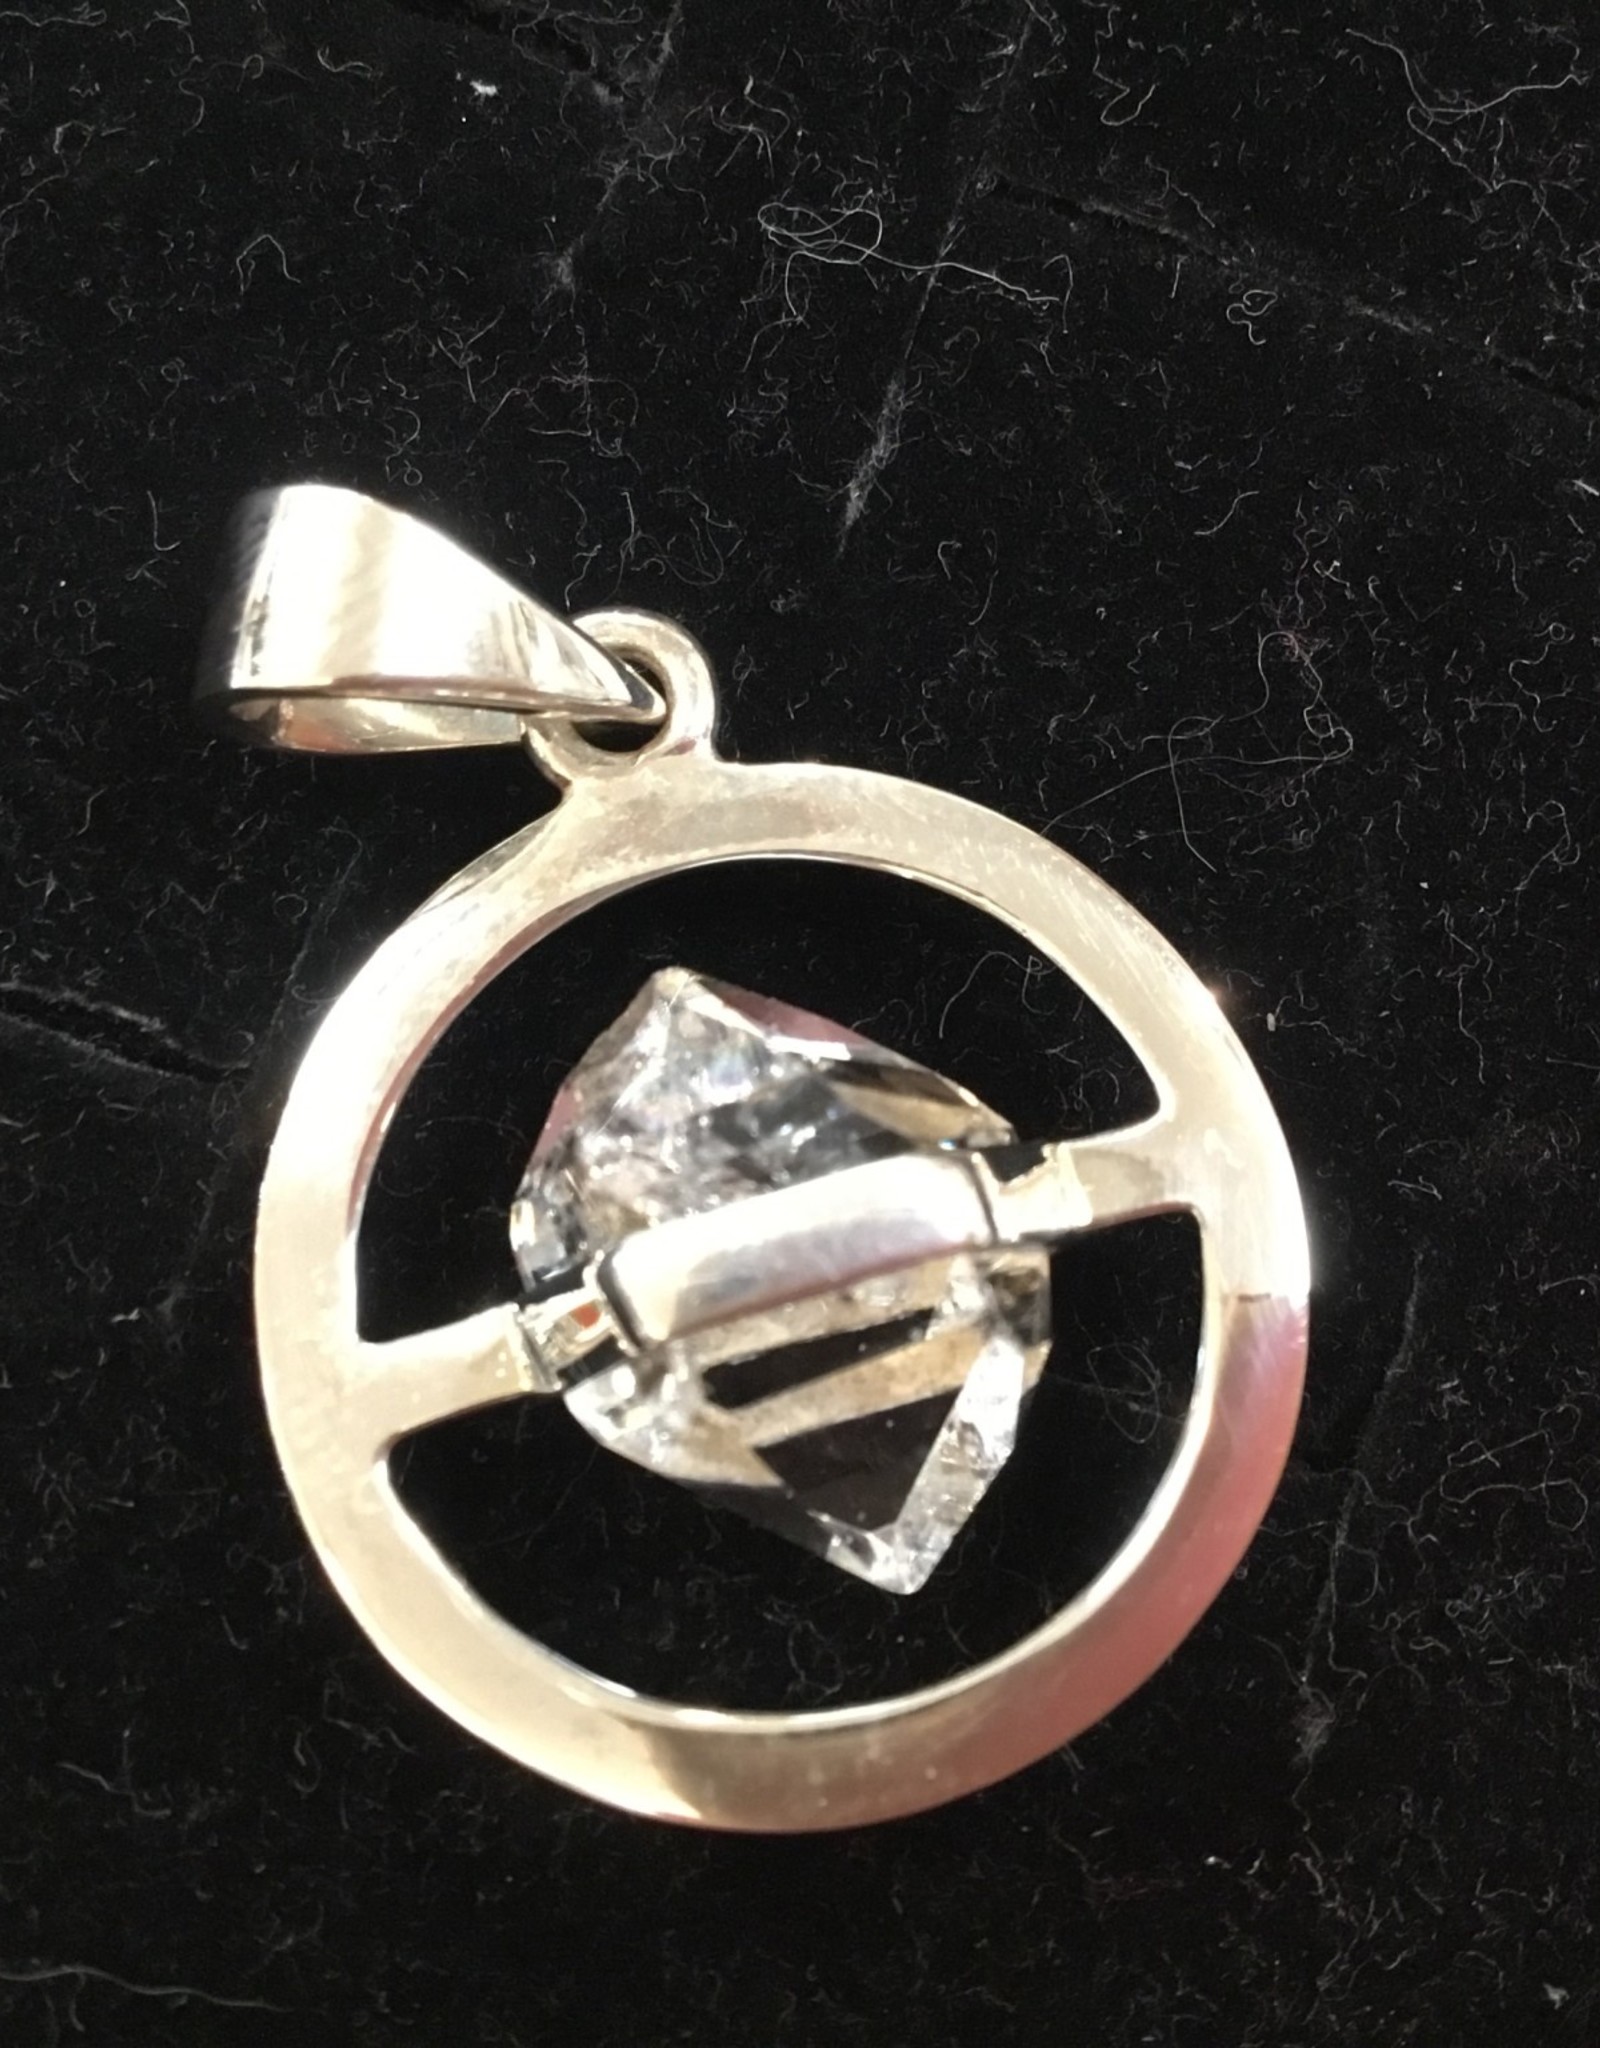 Herkimer Quartz Diamond Silver Pendant -